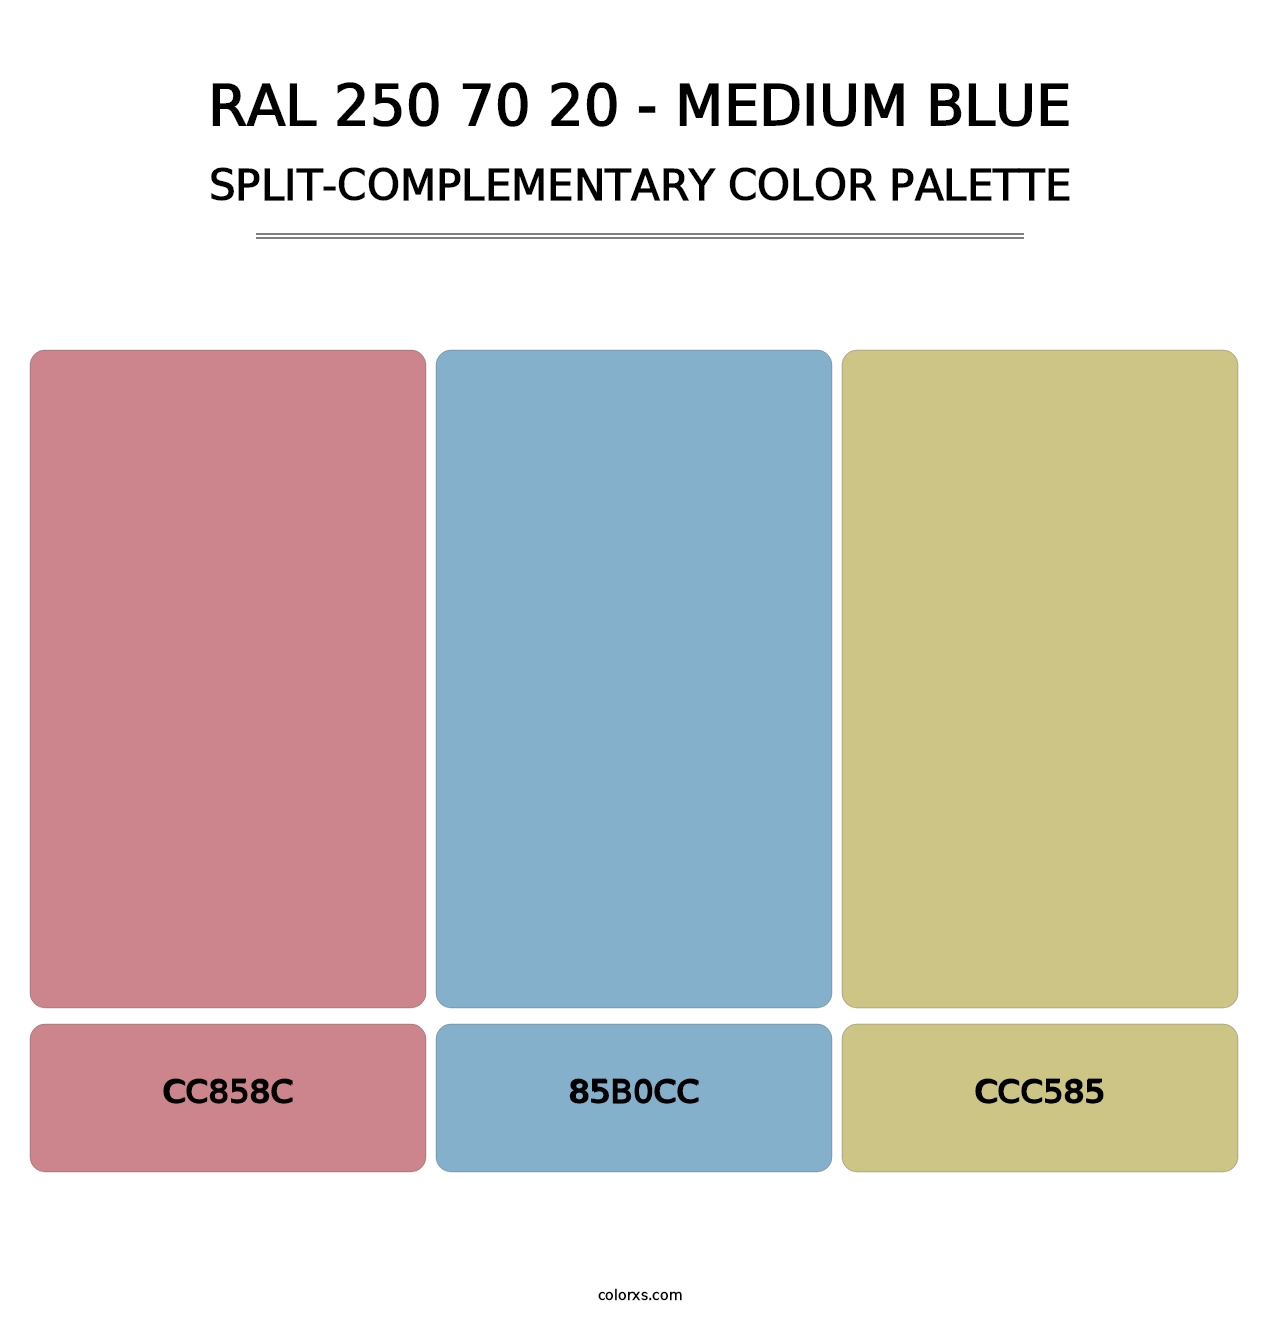 RAL 250 70 20 - Medium Blue - Split-Complementary Color Palette